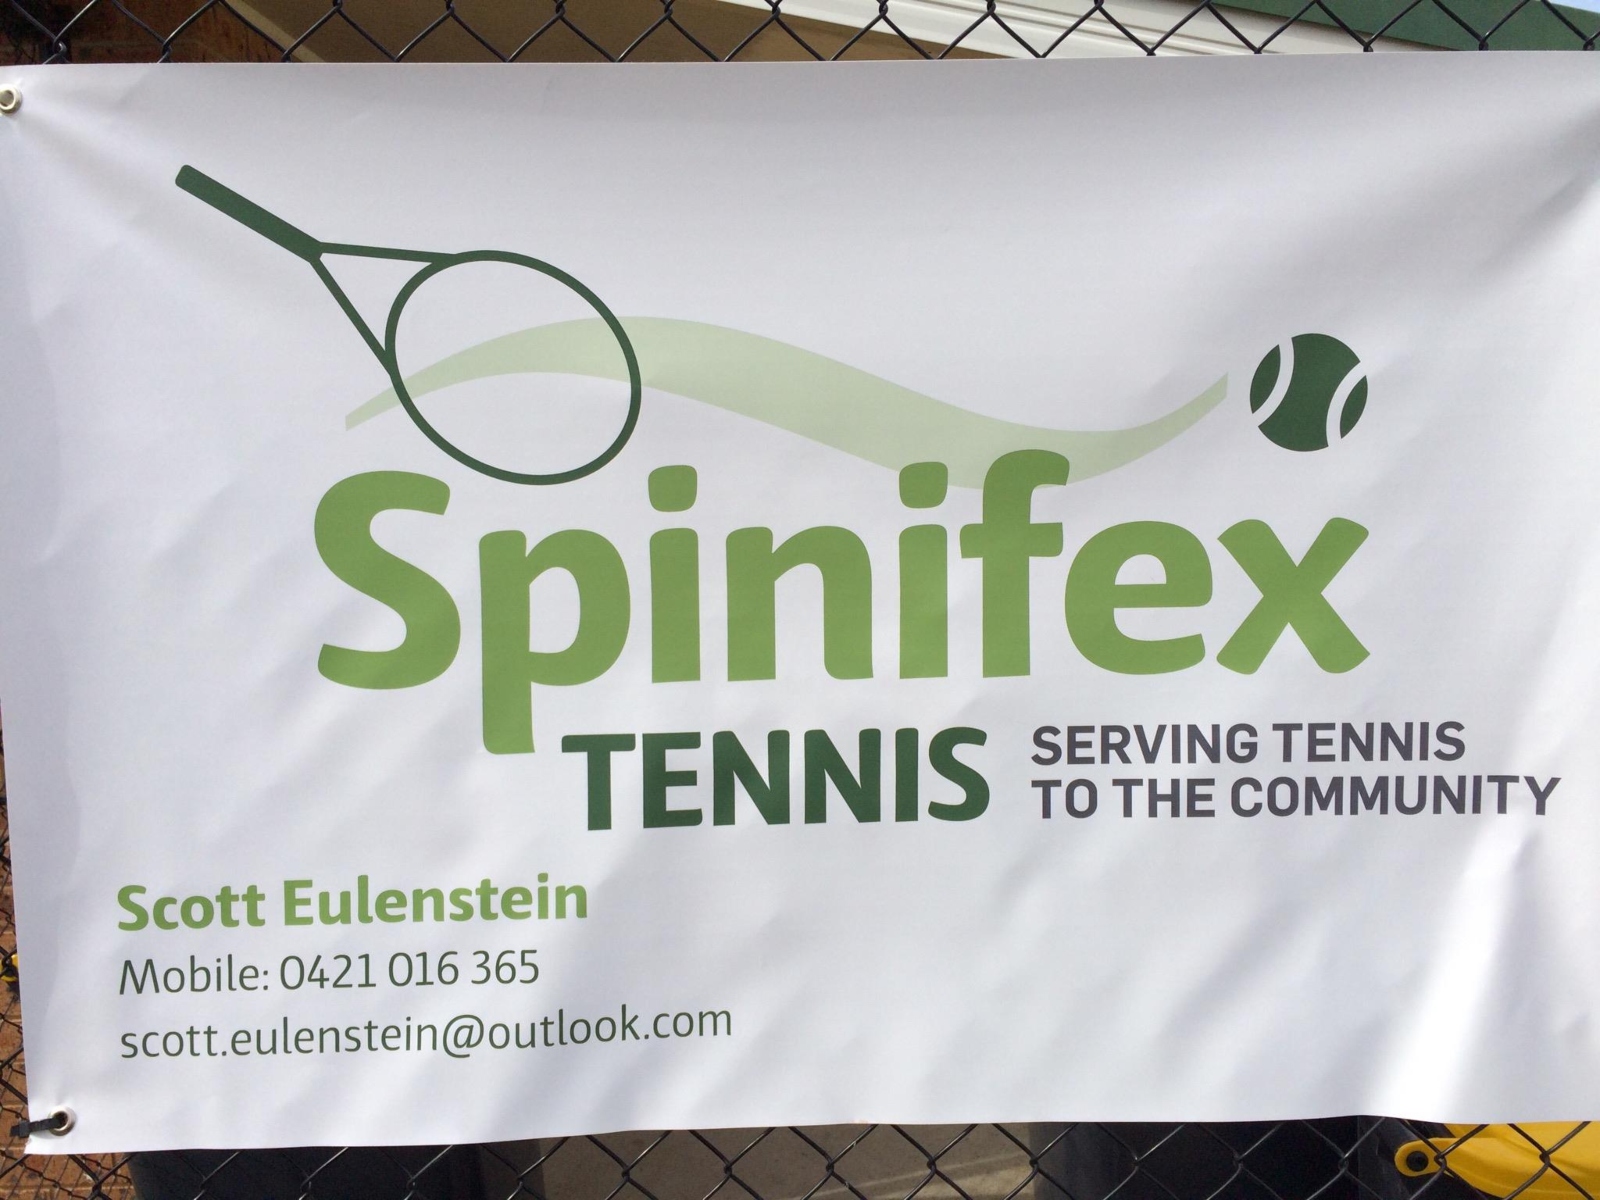 Image for Spinifex Tennis (Yass & Murrumbateman)